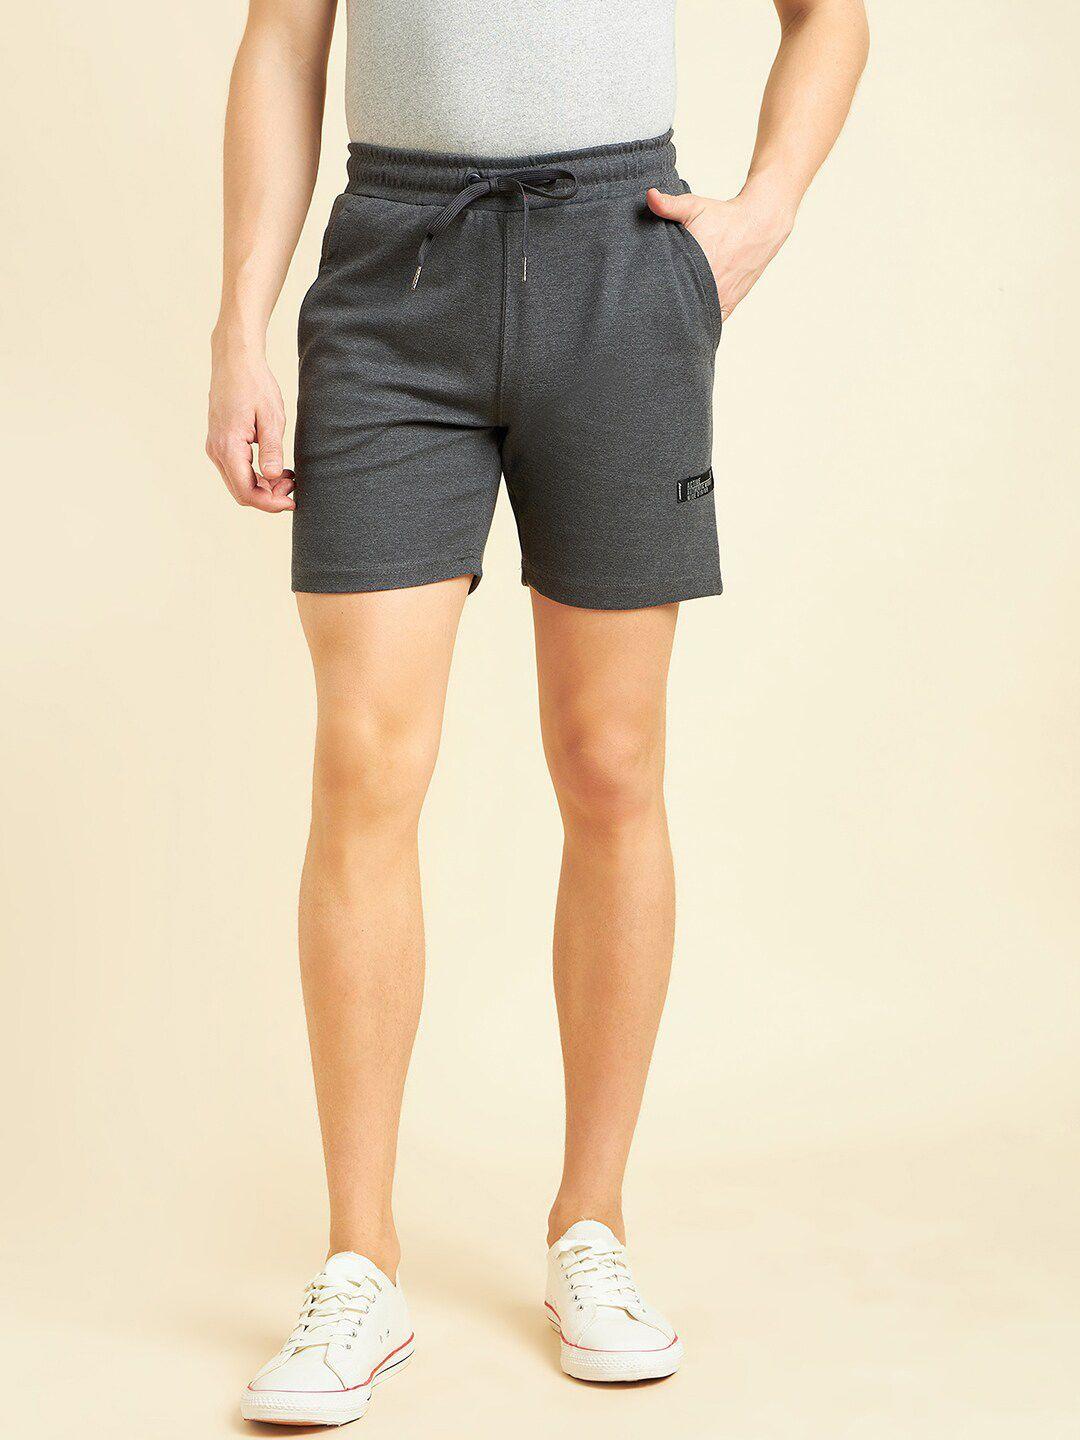 sweet-dreams-men-charcoal-inner-elastic-mid-rise-shorts